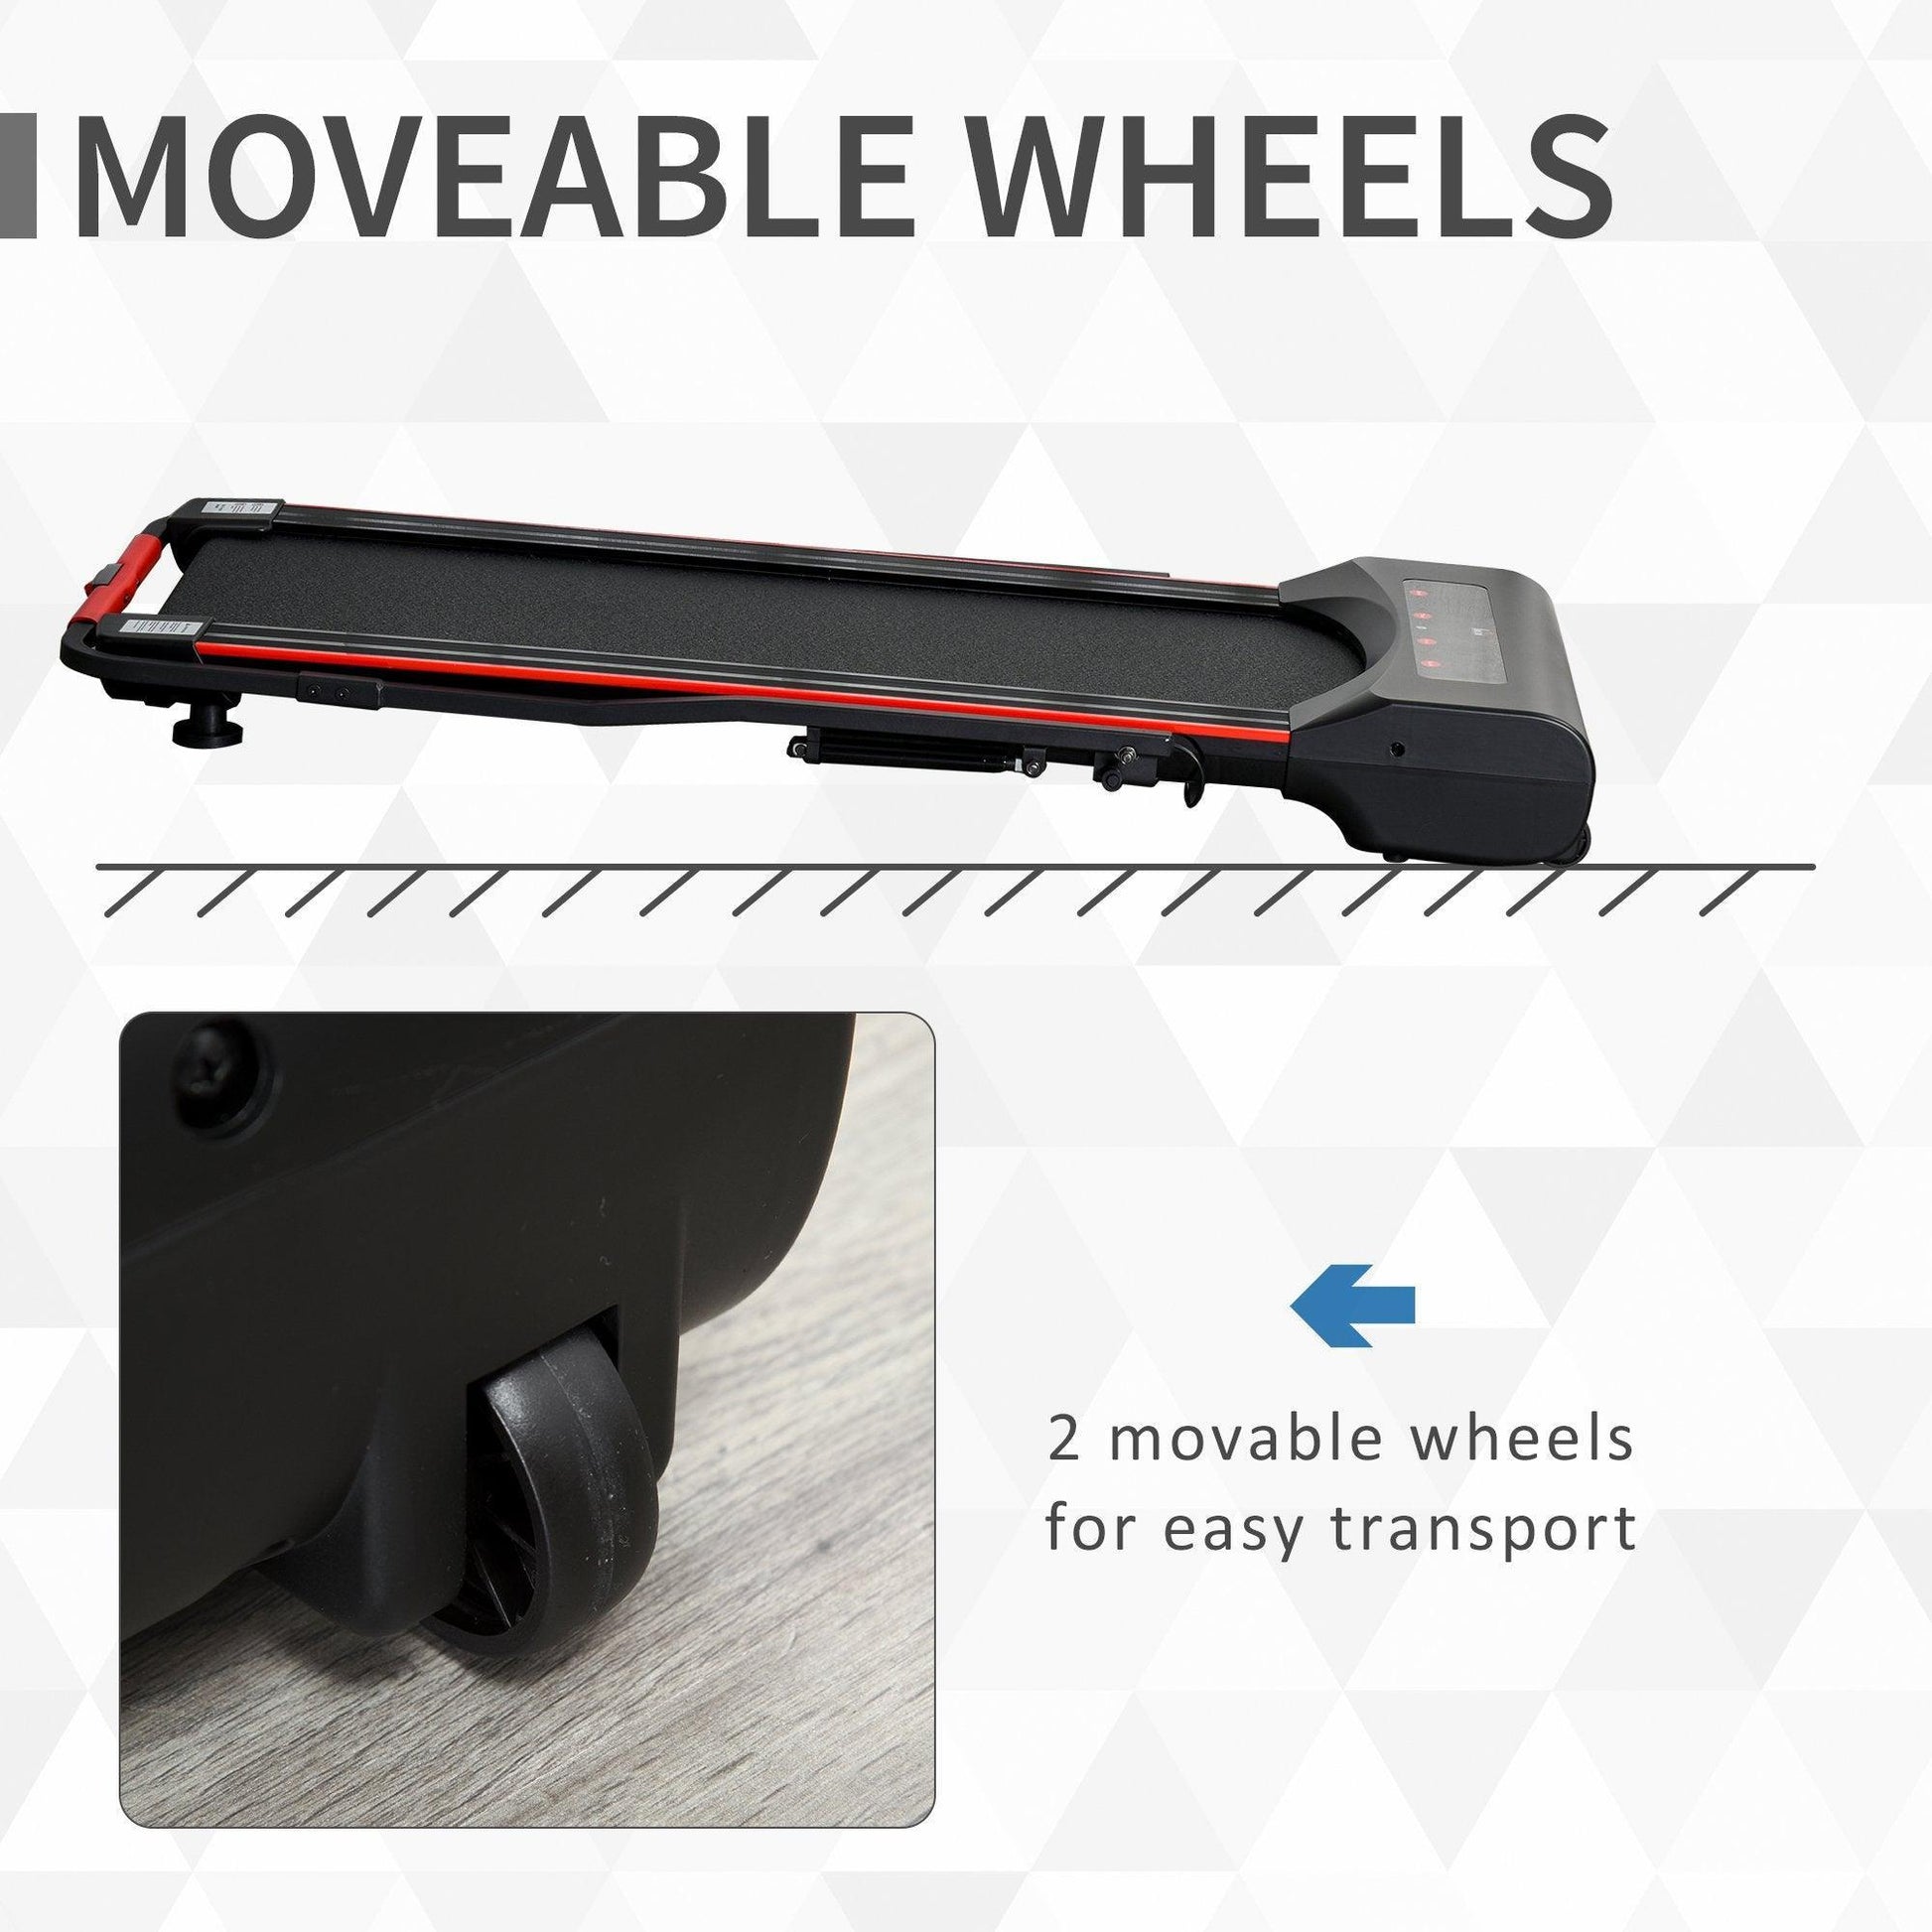 HOMCOM Foldable Walking Treadmill: Simple Fitness Solution - ALL4U RETAILER LTD